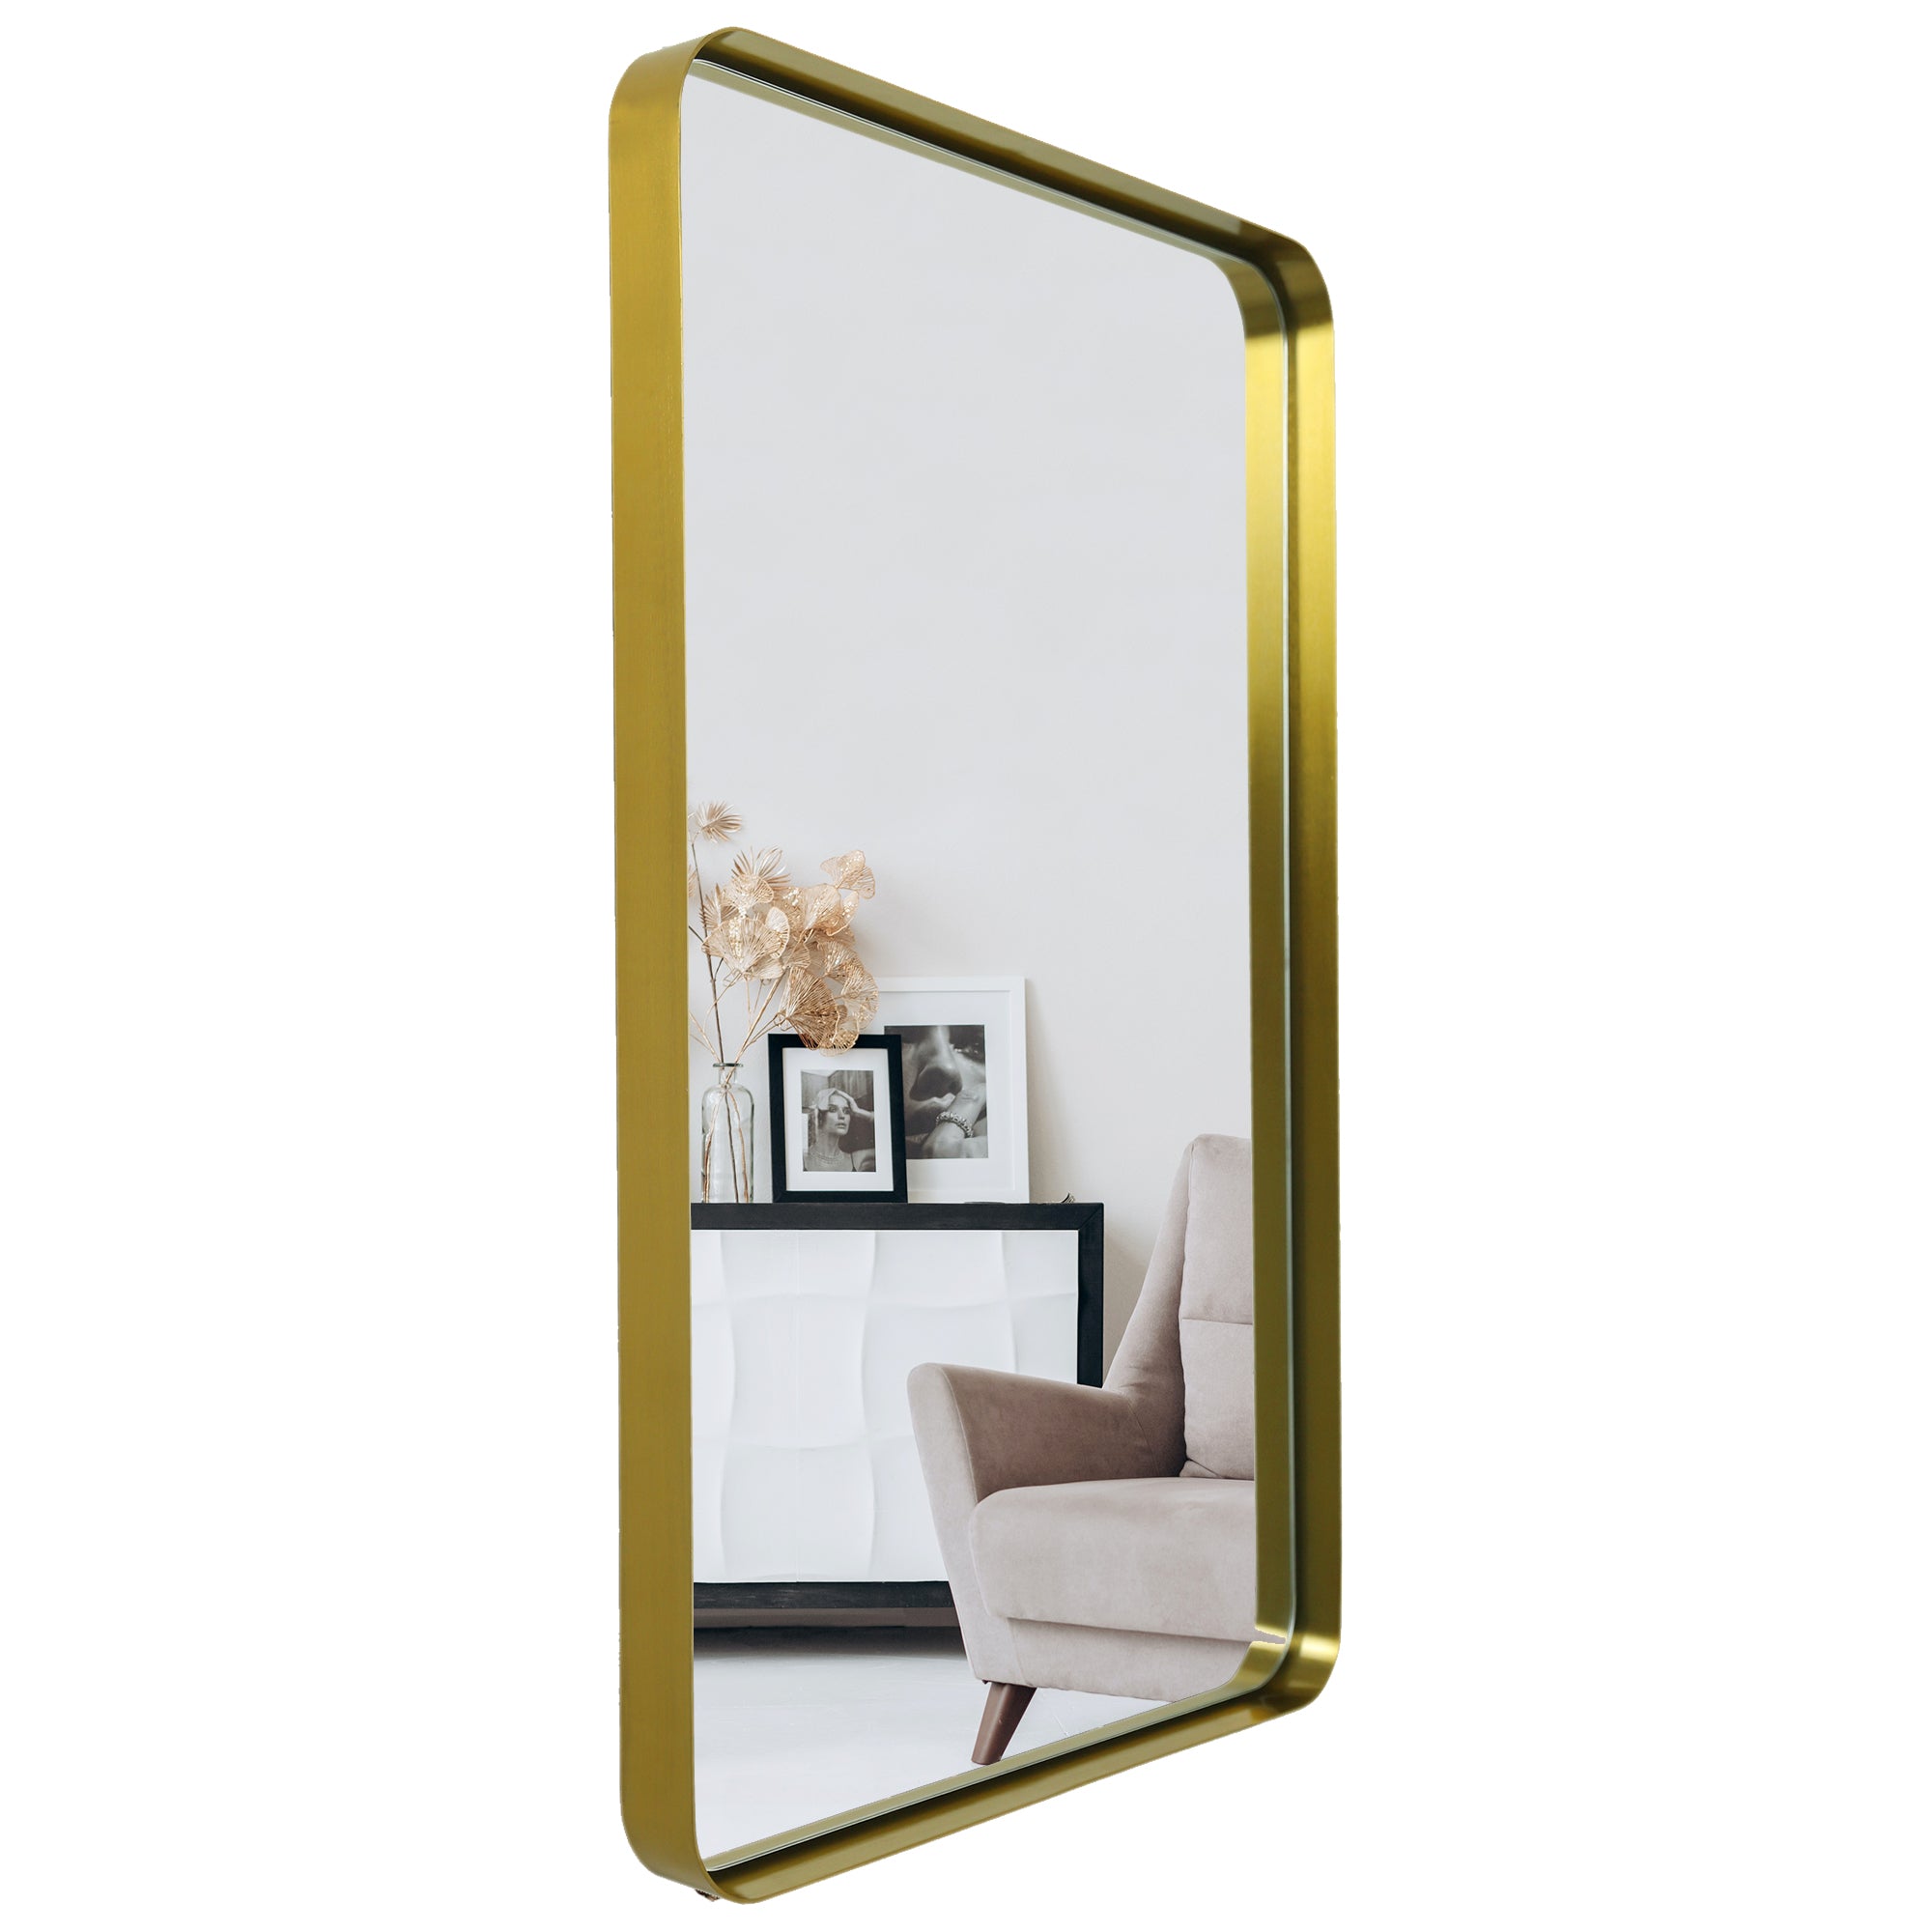 Gold Bathroom Hanging Mirror, 24"x36”